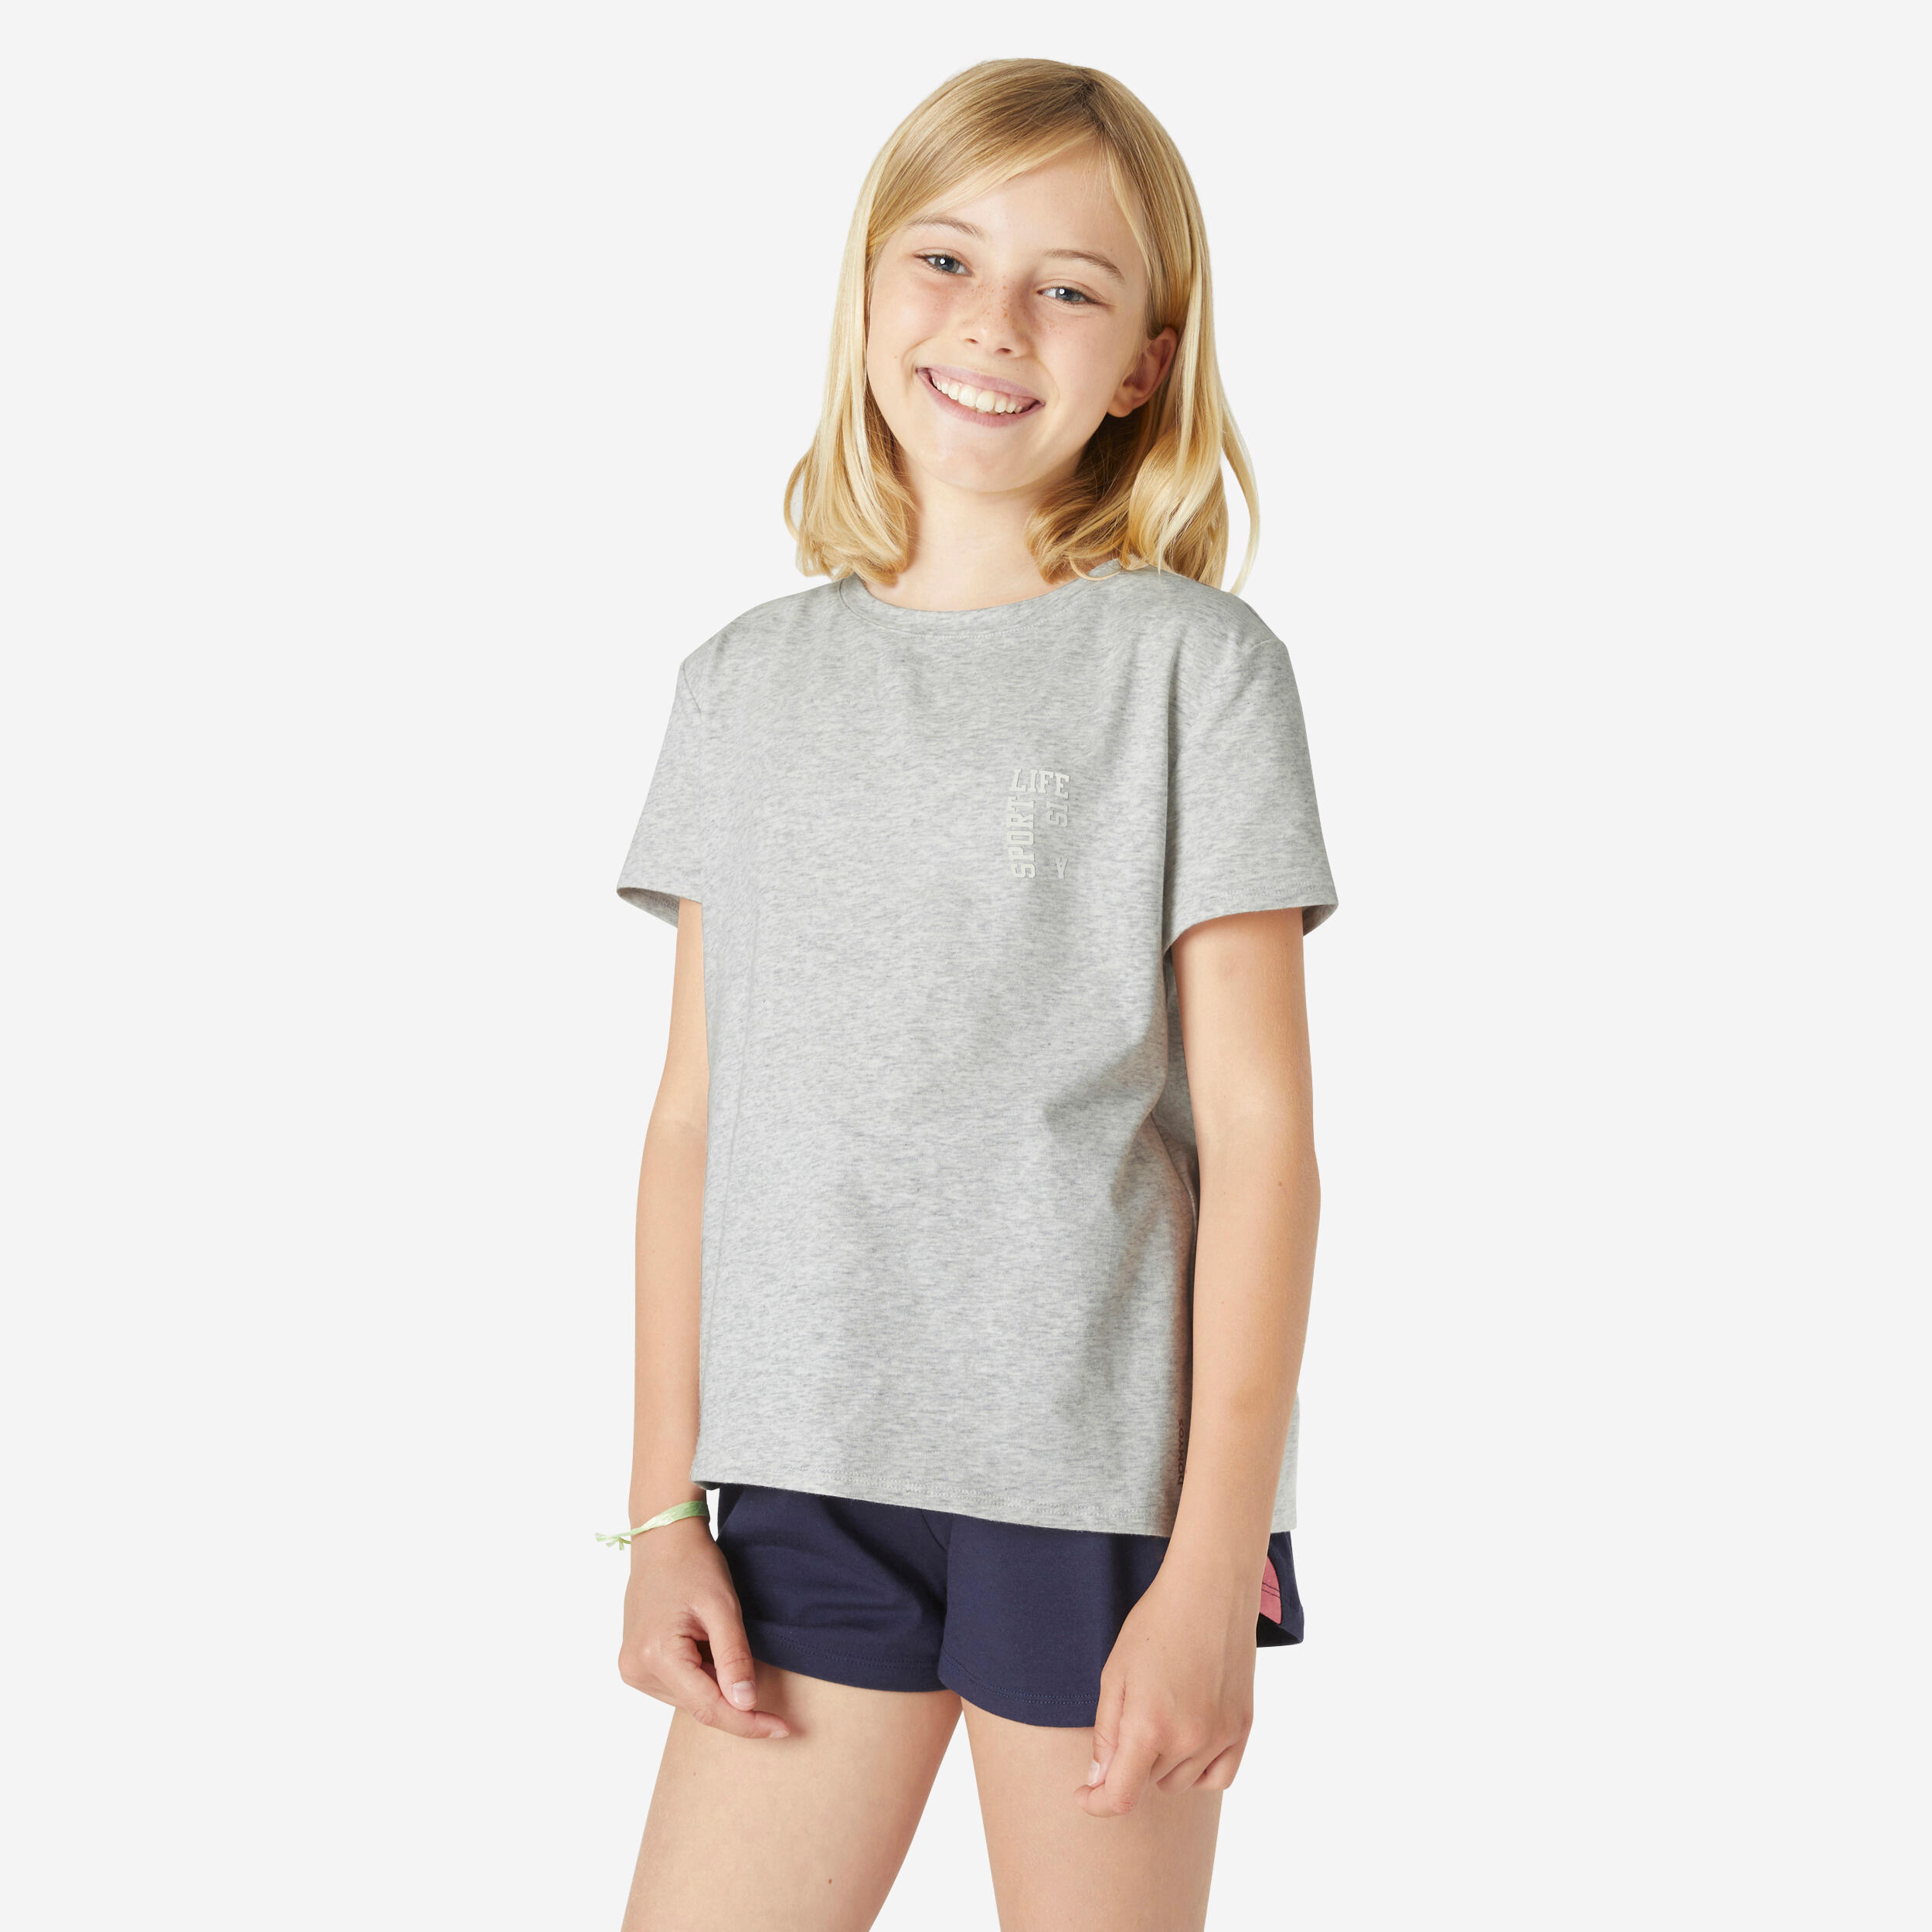 500 Gym Short-Sleeved T-Shirt - Girls - DOMYOS